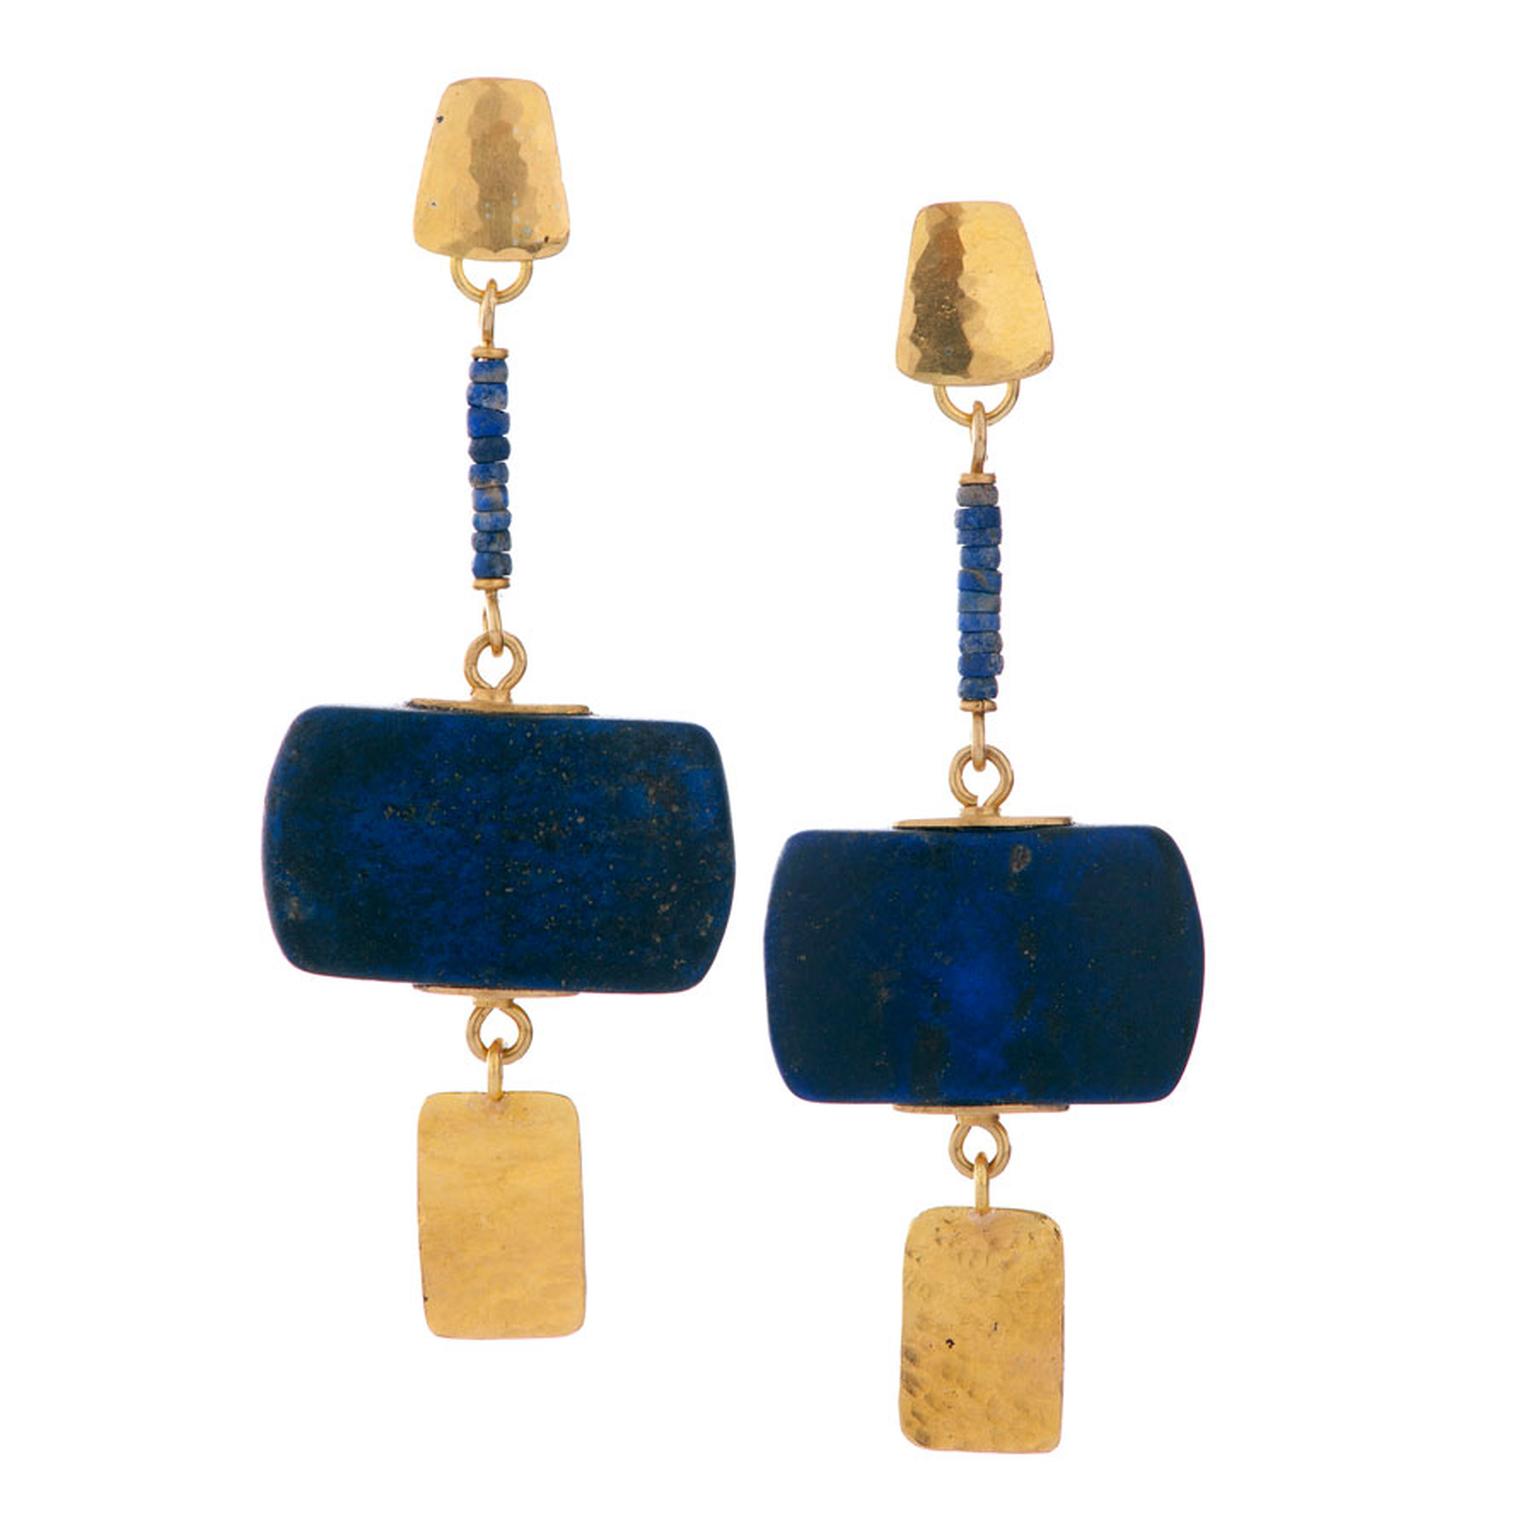 Lisa-Black-Ancient-Mesopotamian-Lapis-Lazuli-Earrings.jpg